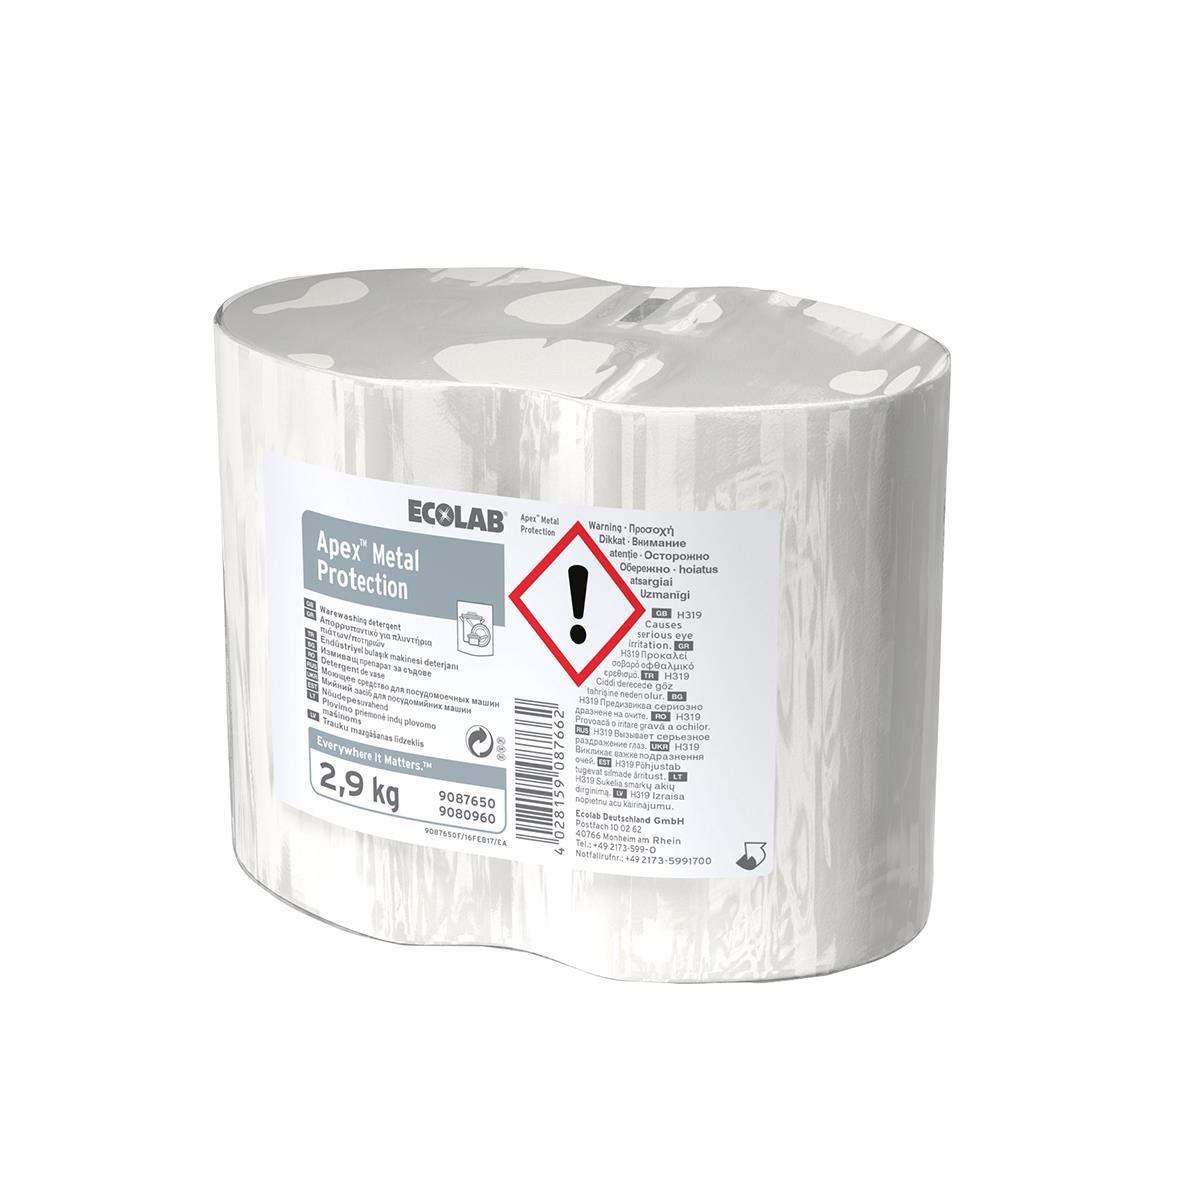 Maskindiskmedel Ecolab Apex Metal Protection 2,9kg 52050298